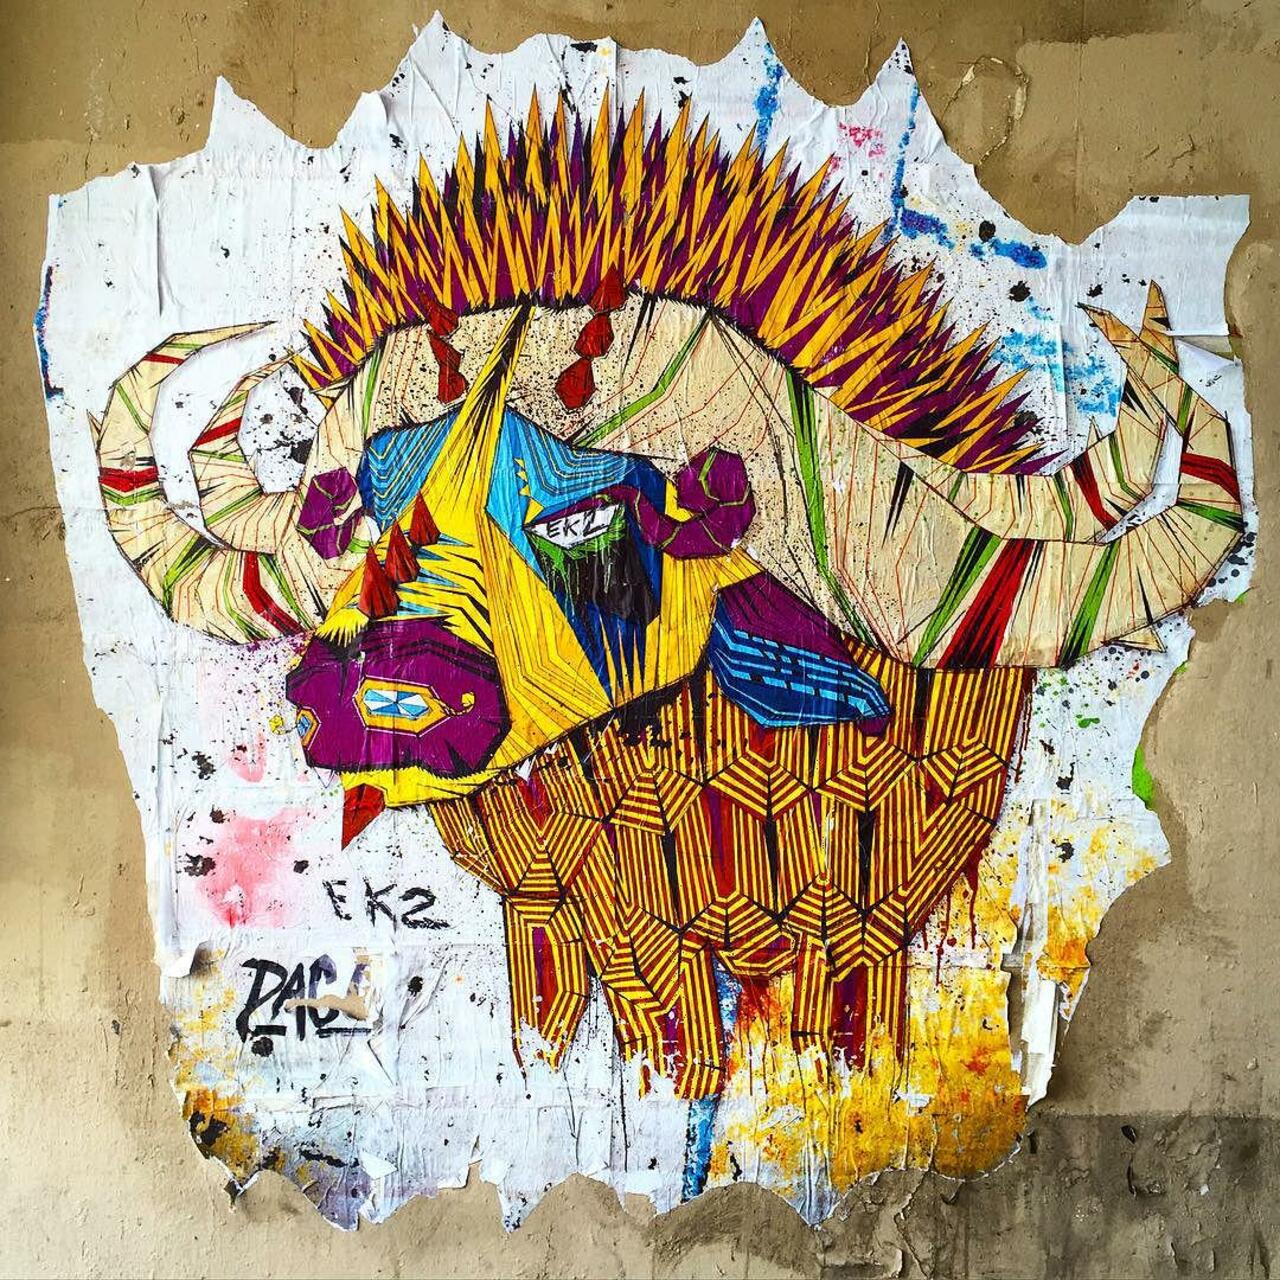 cahowell1956: RT circumjacent_fr: #Paris #graffiti photo by jeanlucr http://ift.tt/1VIaa7L #StreetArt http://t.co/2ZRFJ6lgvh